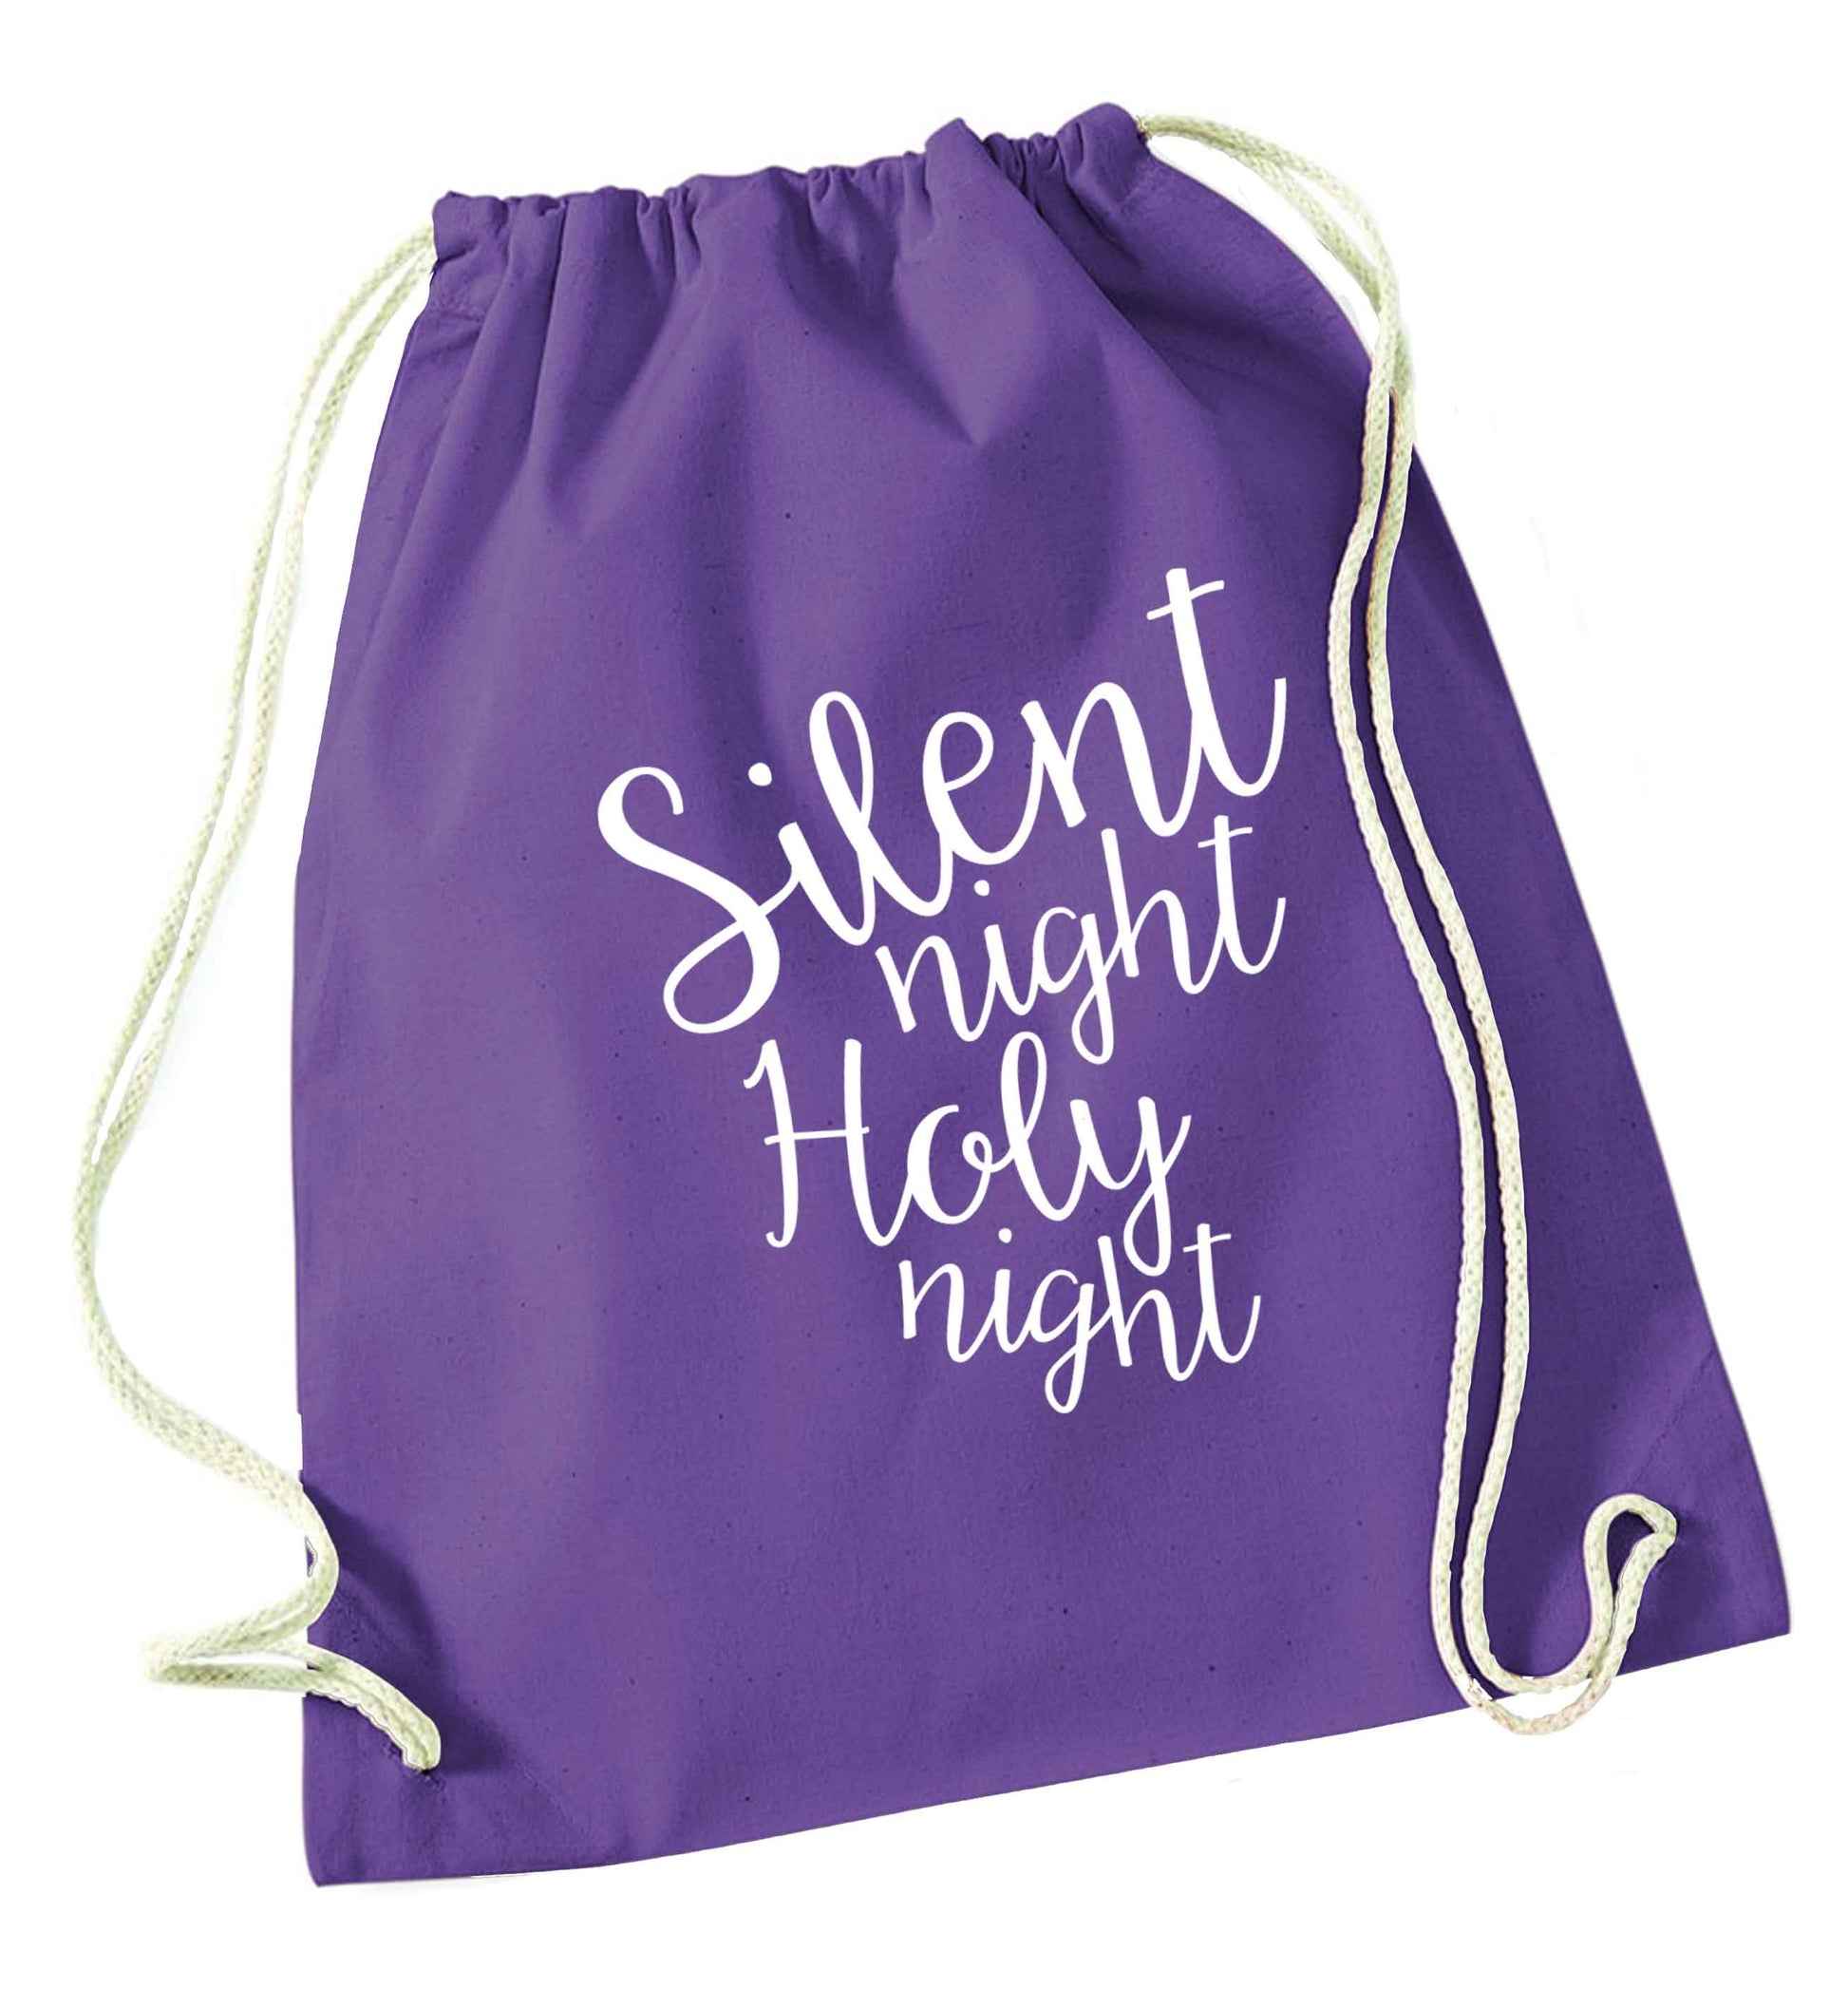 Silent night holy night purple drawstring bag